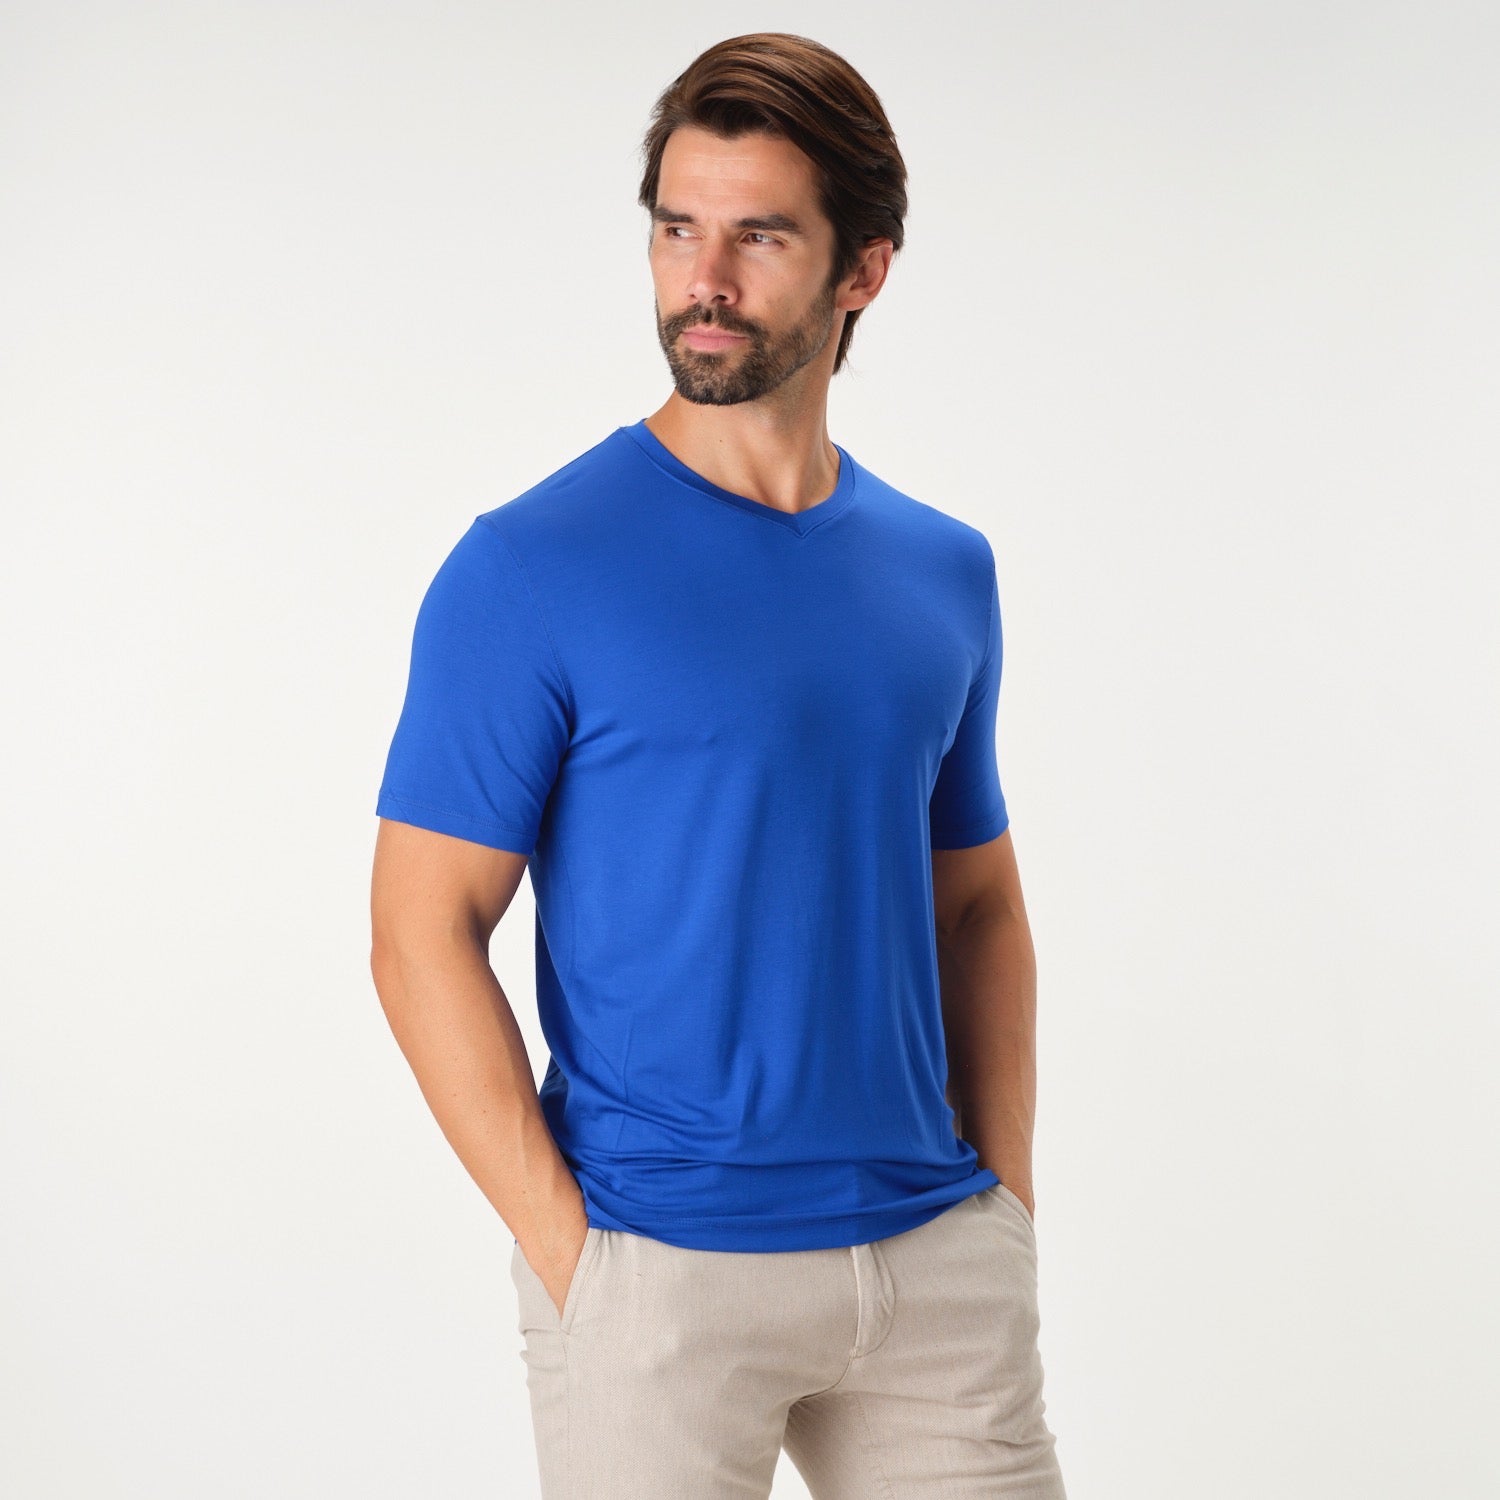 Solid Performance Royal Blue V-Neck T-Shirt